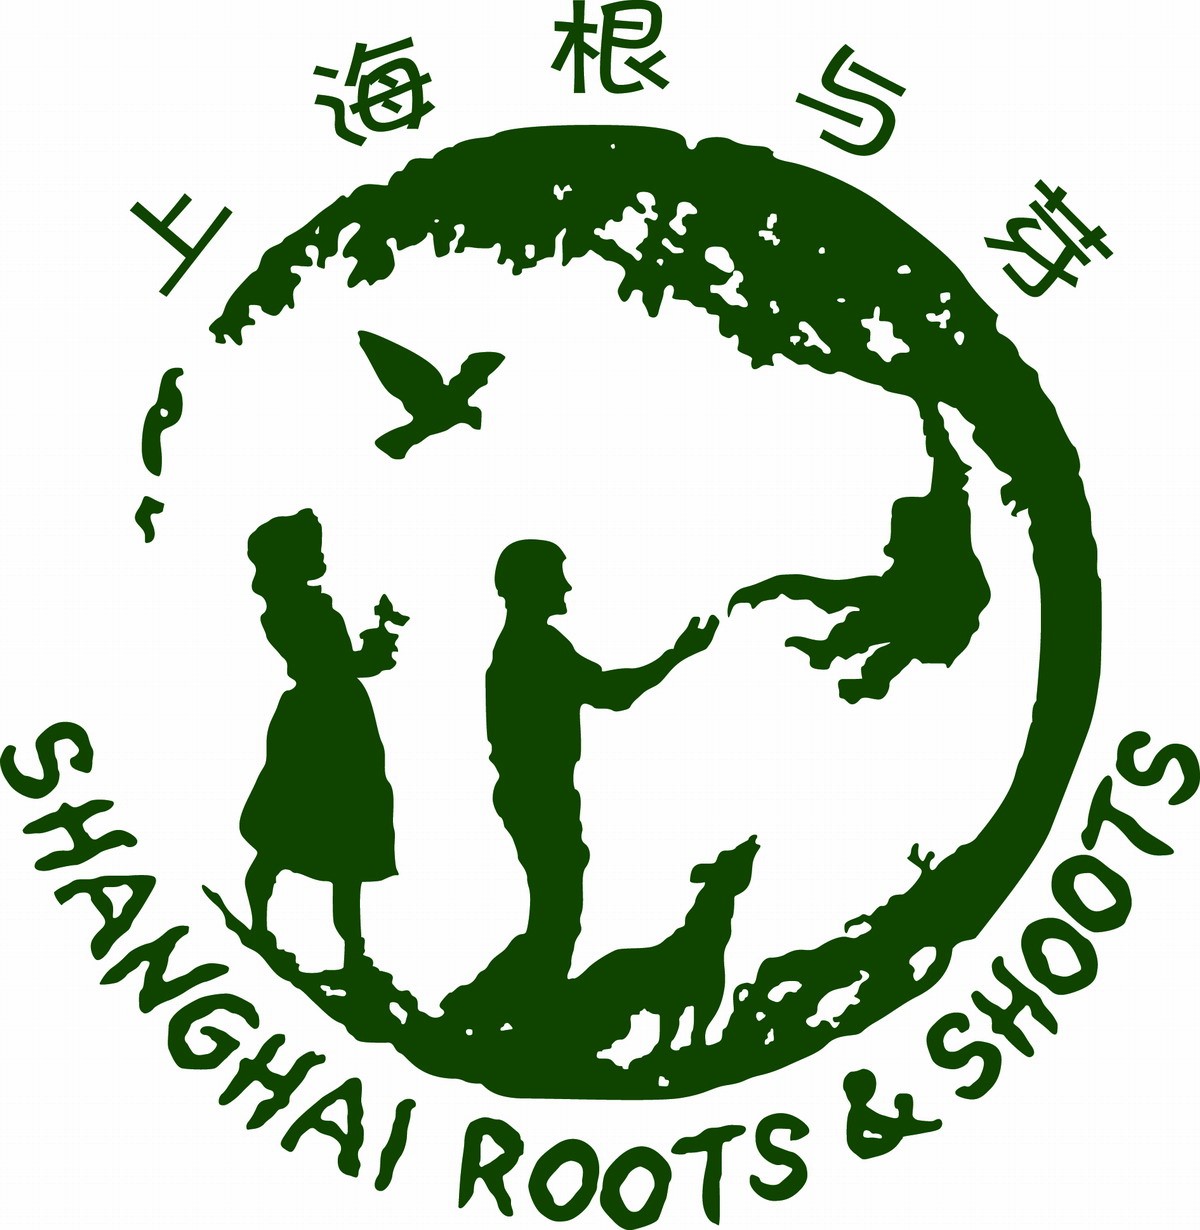 shangai roots and shoot logo